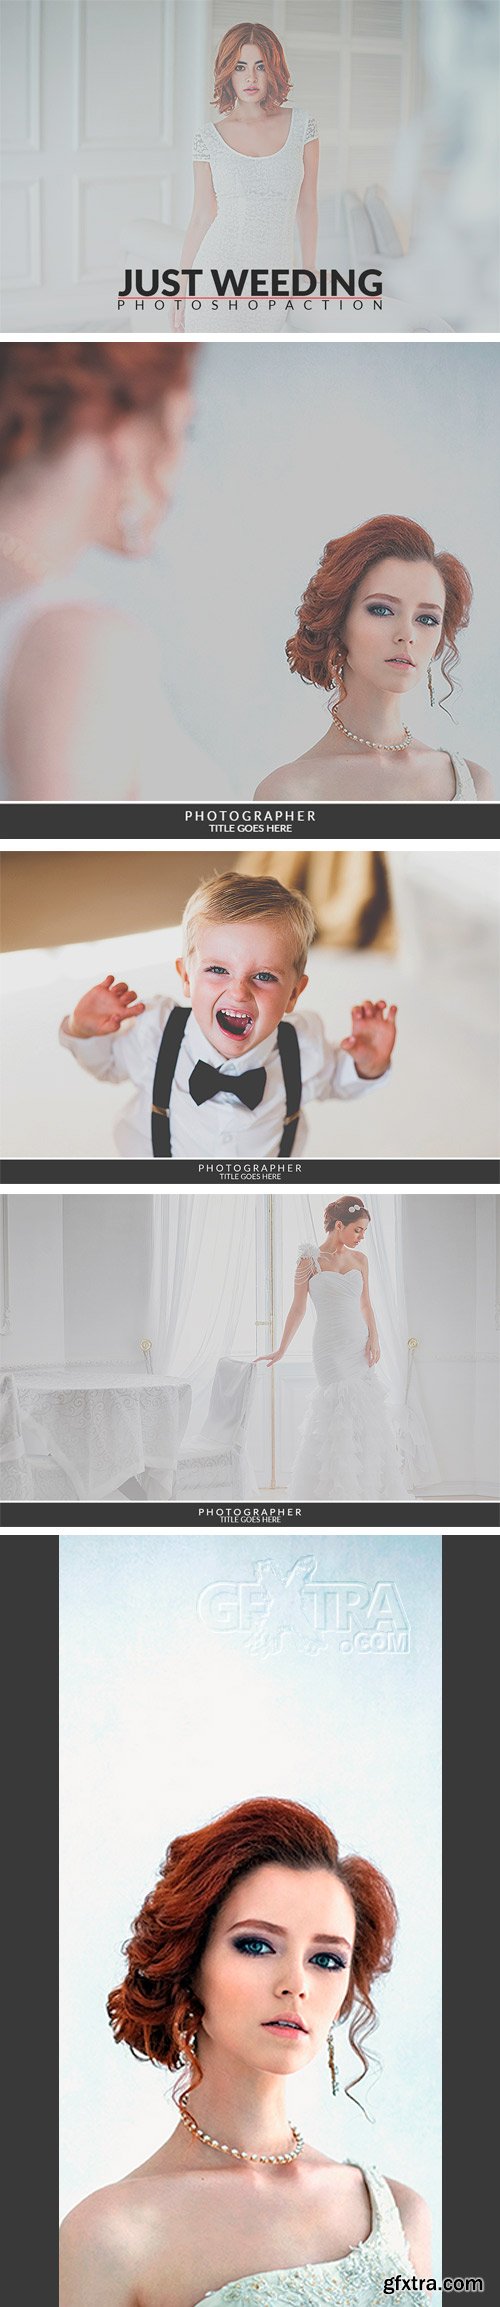 CM 299644 - Just Wedding Photoshop Action